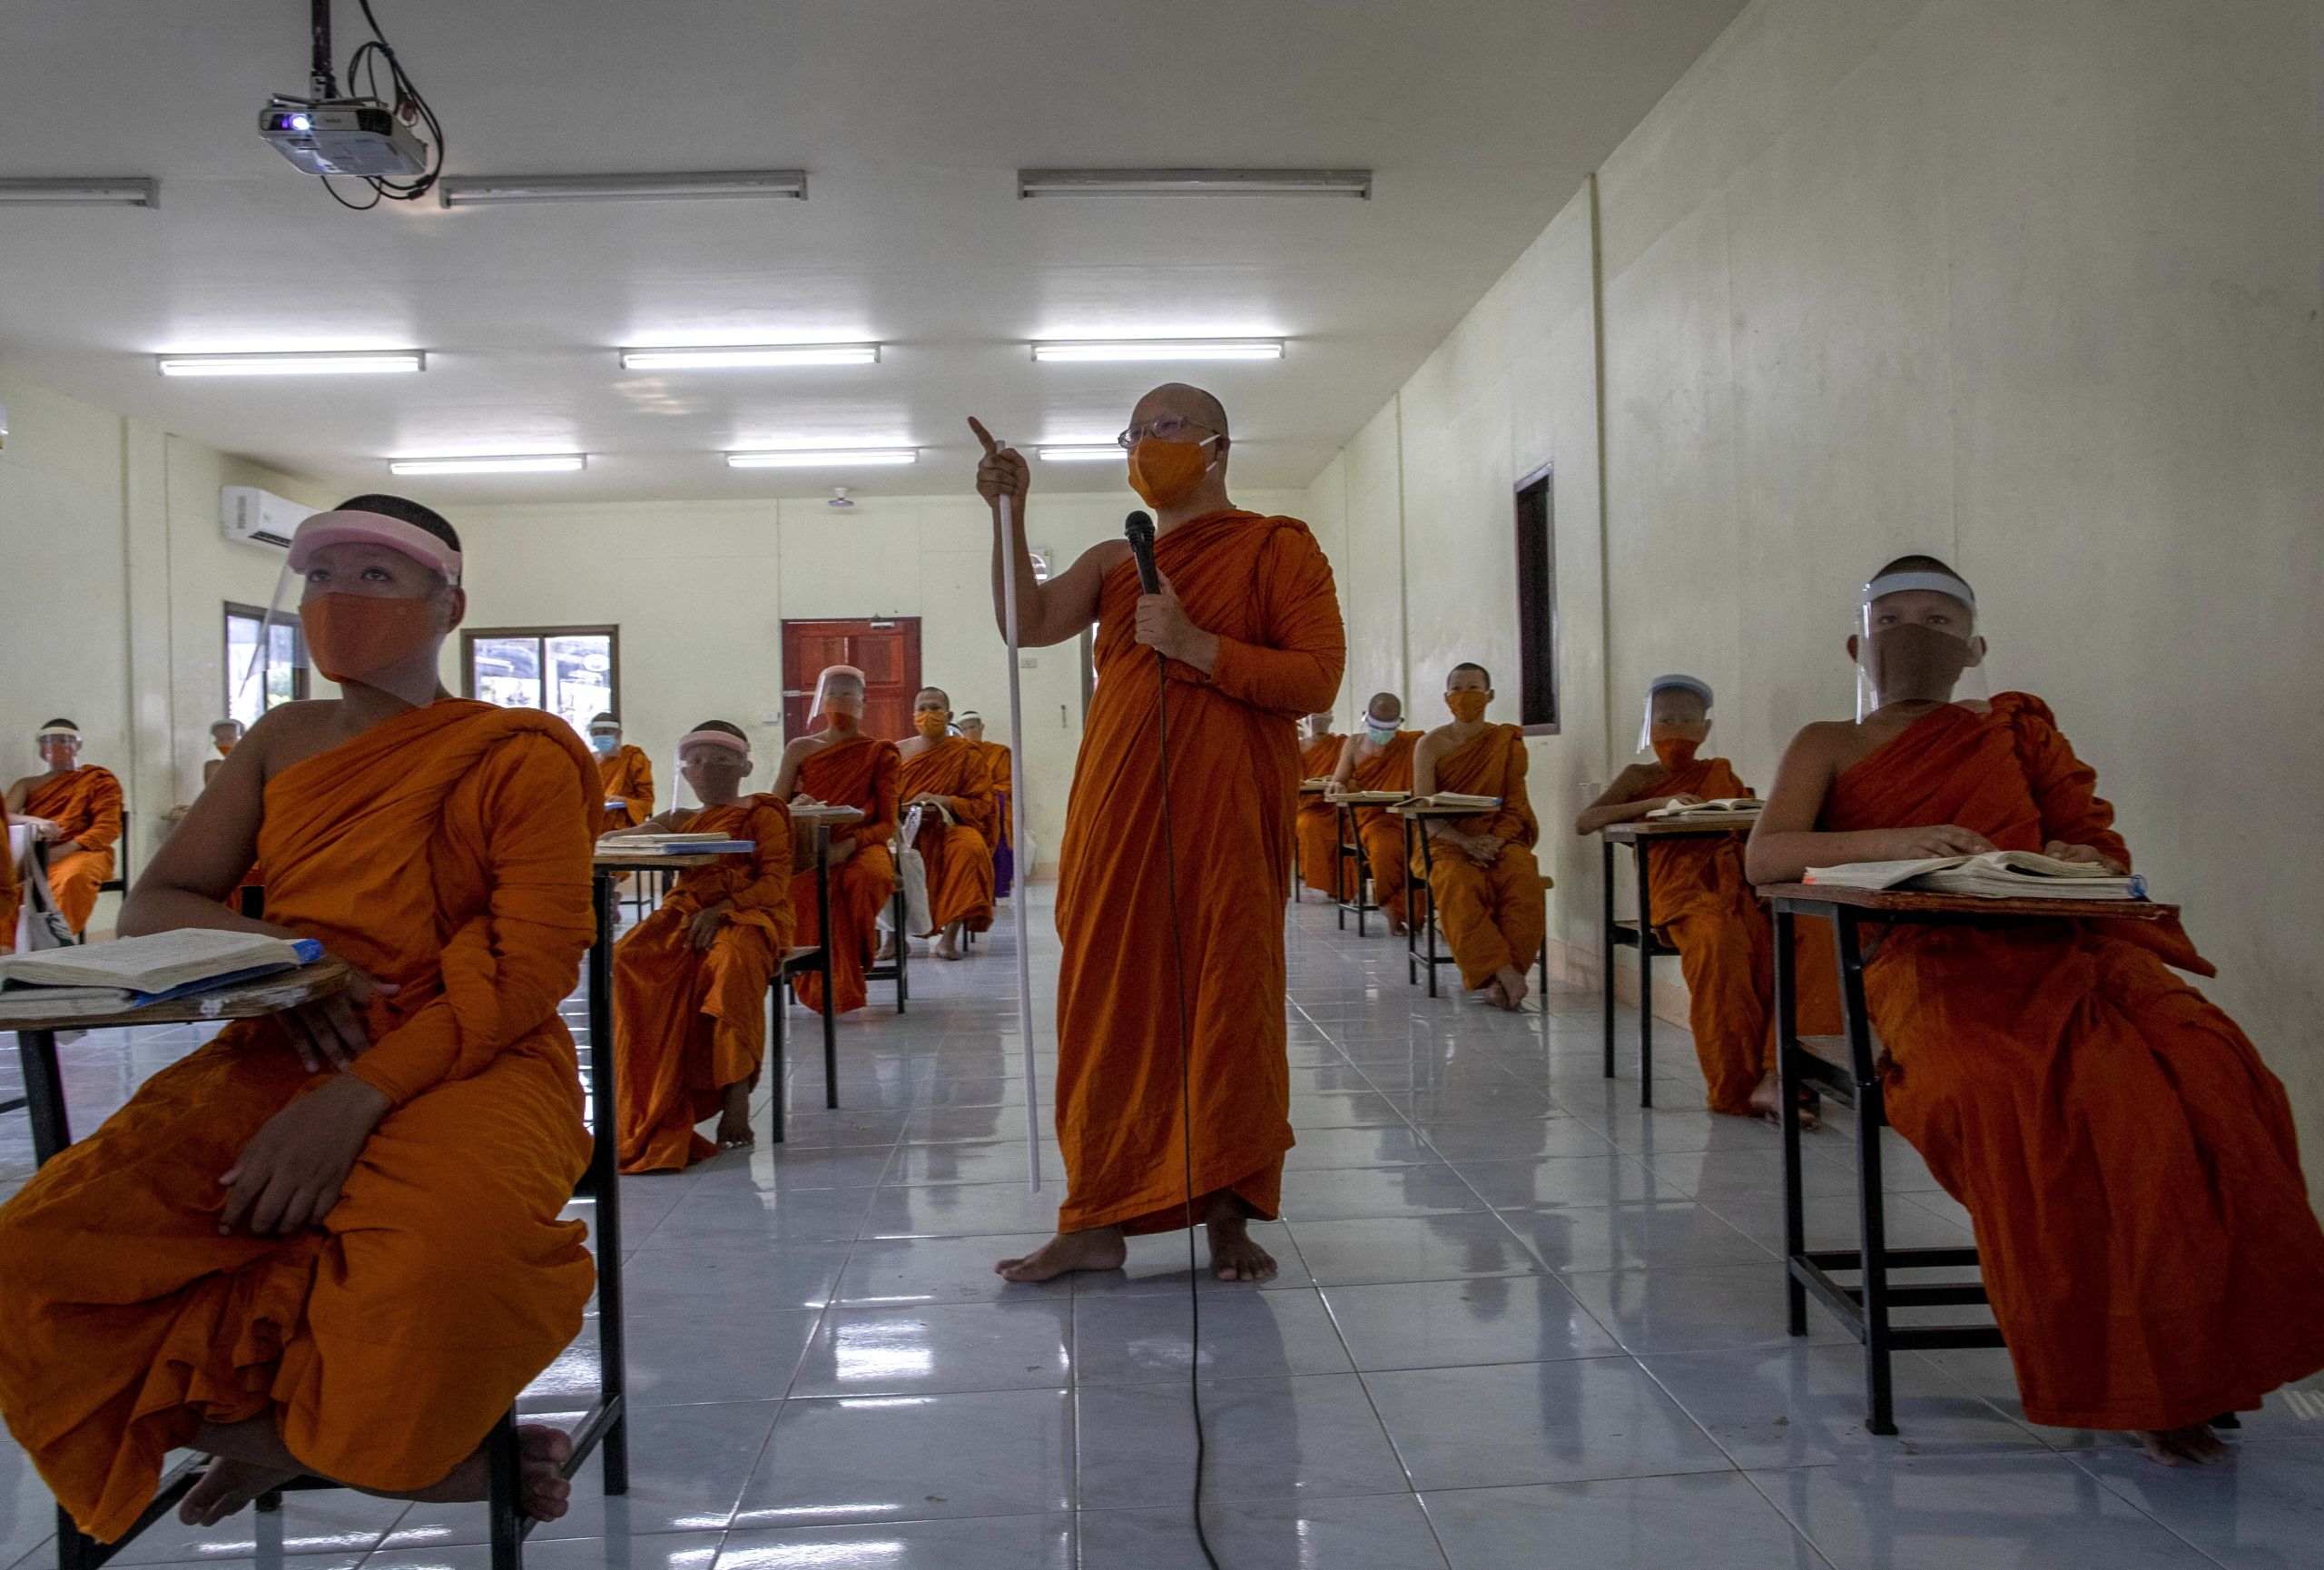 Novice Buddhist monks in Bangkok, Thailand.